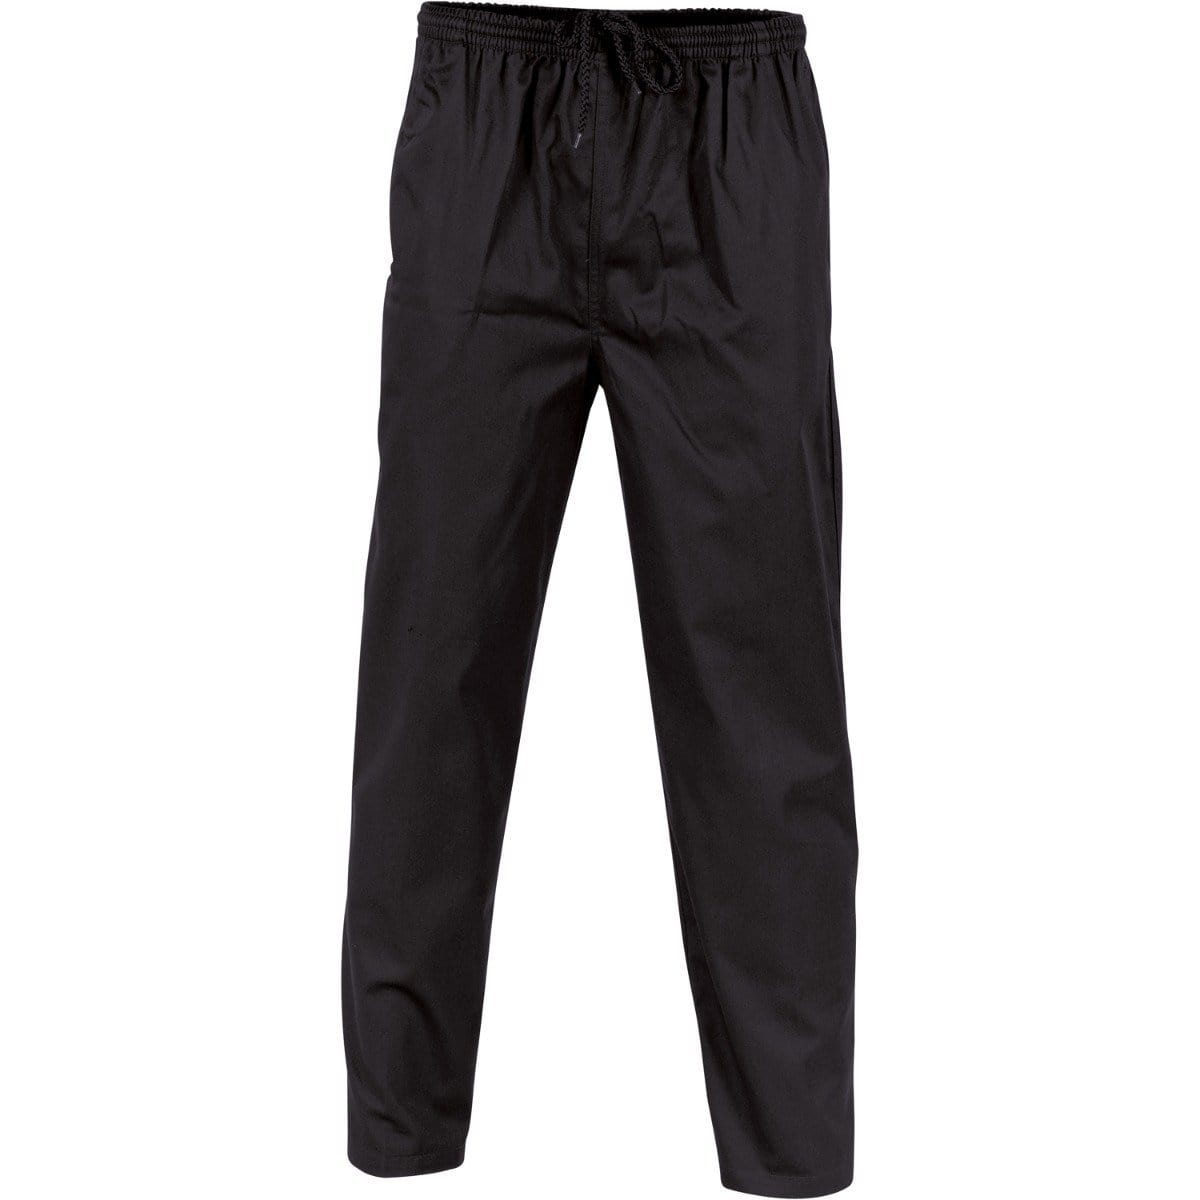 Dnc Workwear Polyester Cotton Drawstring Chef Pants - 1501 Work Wear DNC Workwear Black XS 